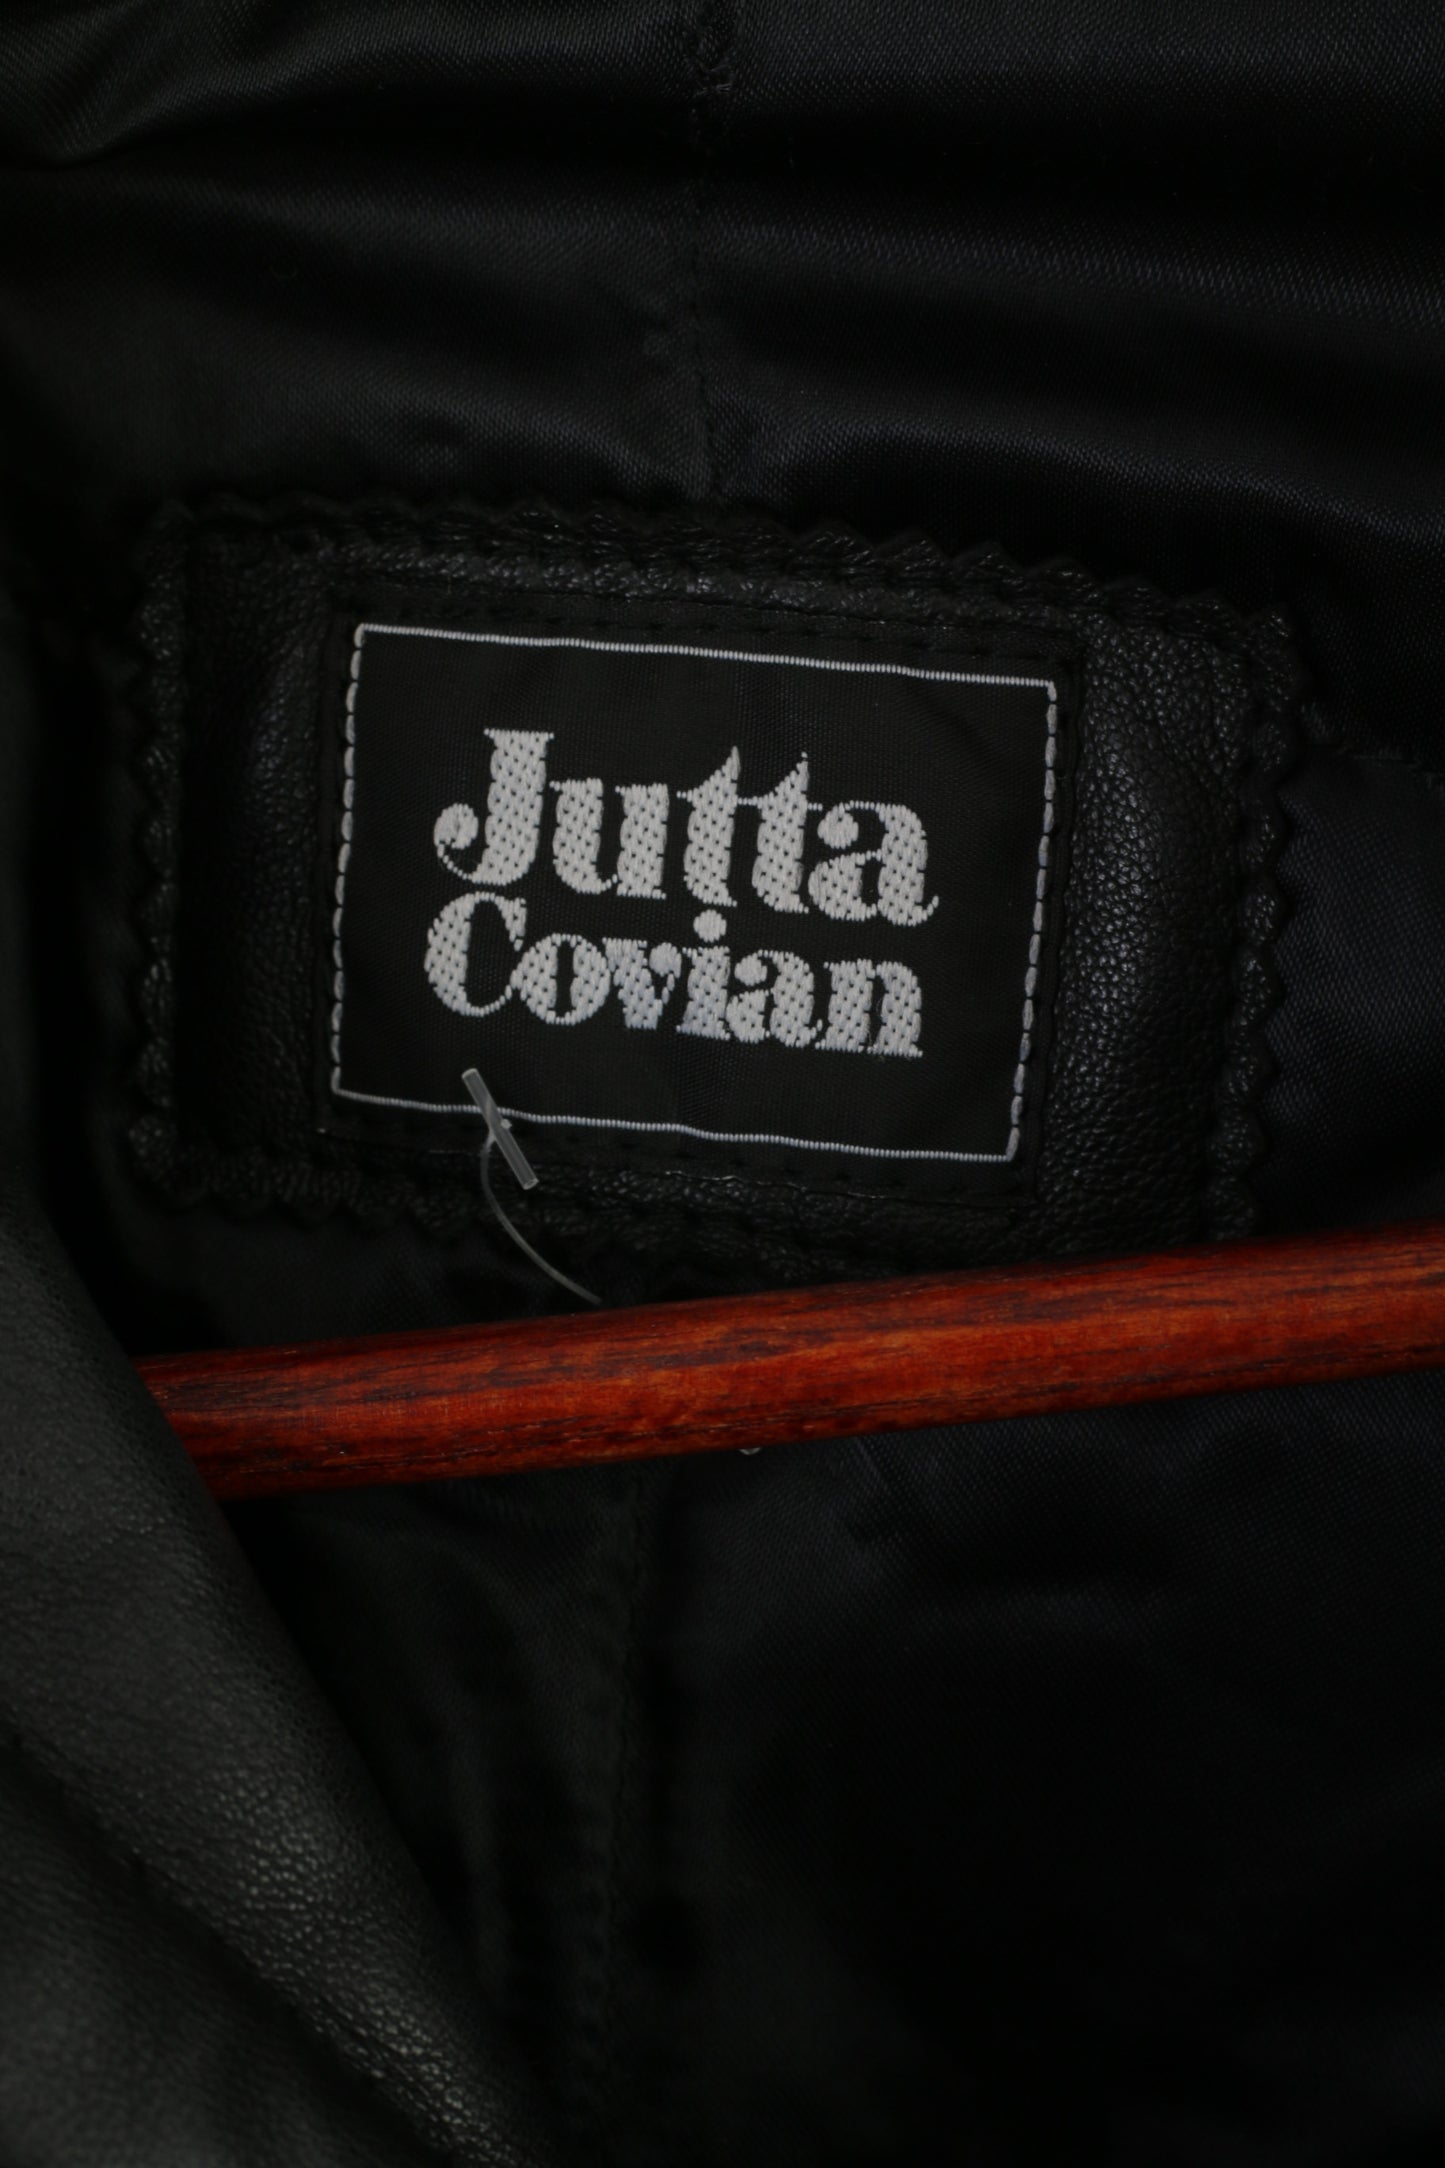 Jutta Covian Women 40 10 M Jacket Blue Ptachwork Vintage 80s Spain Shoulder Pads Oversize Top